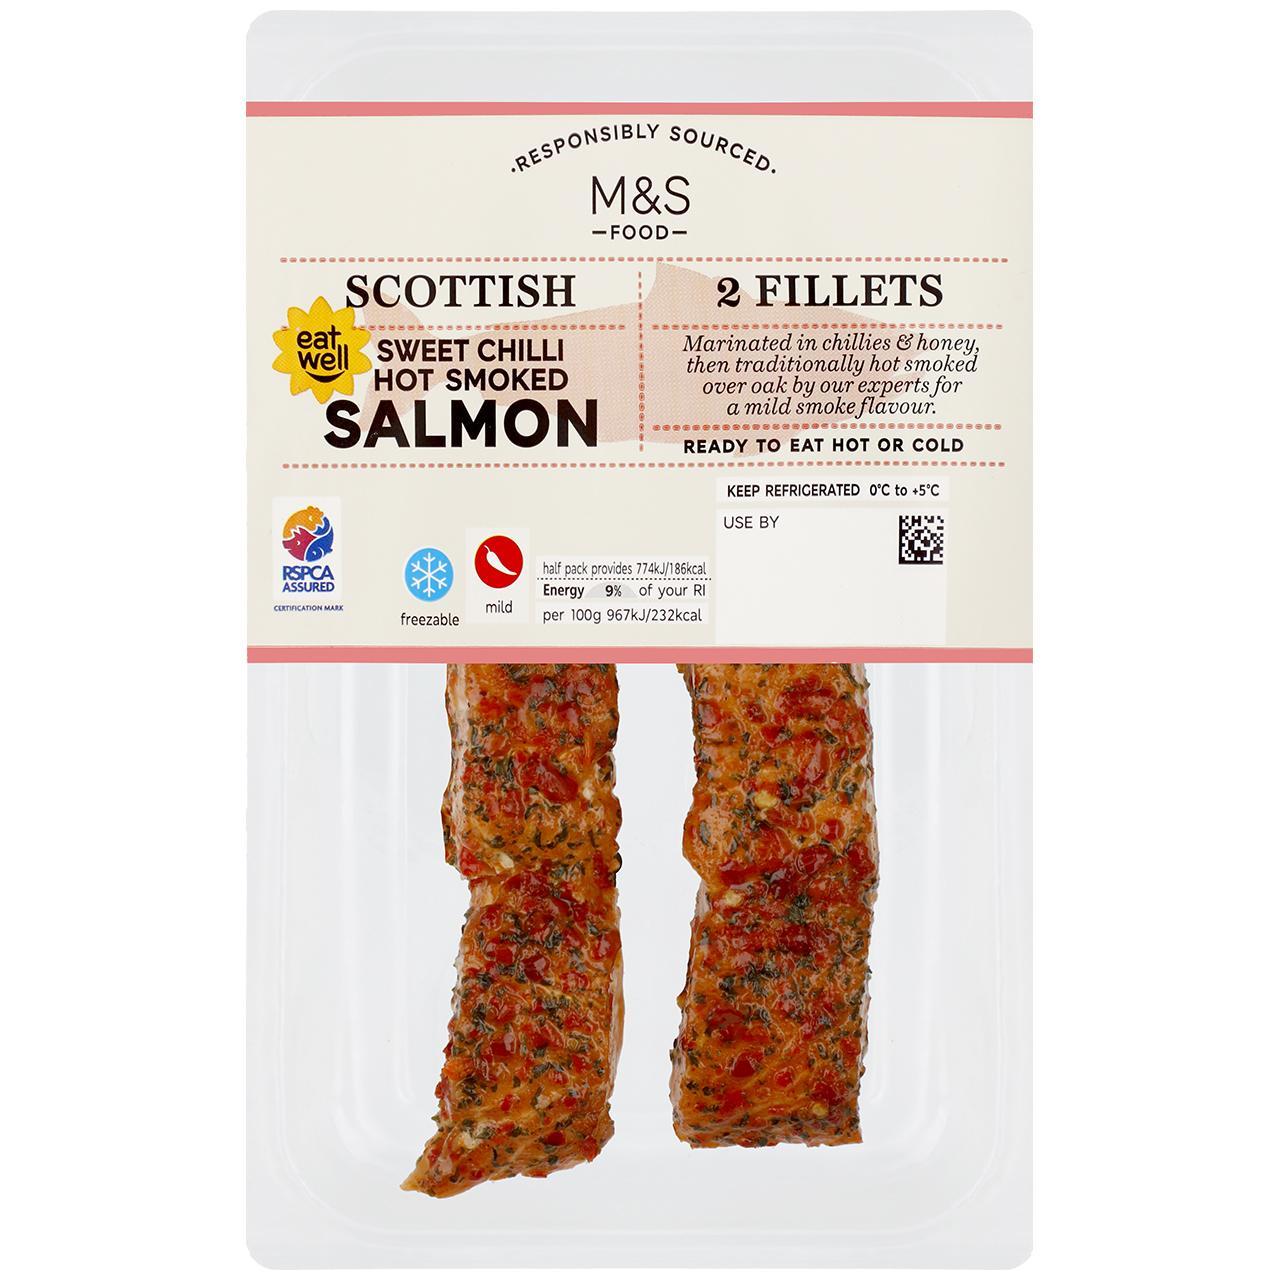 M&S Collection Scottish Mild & Delicate Smoked Salmon 4 Slices